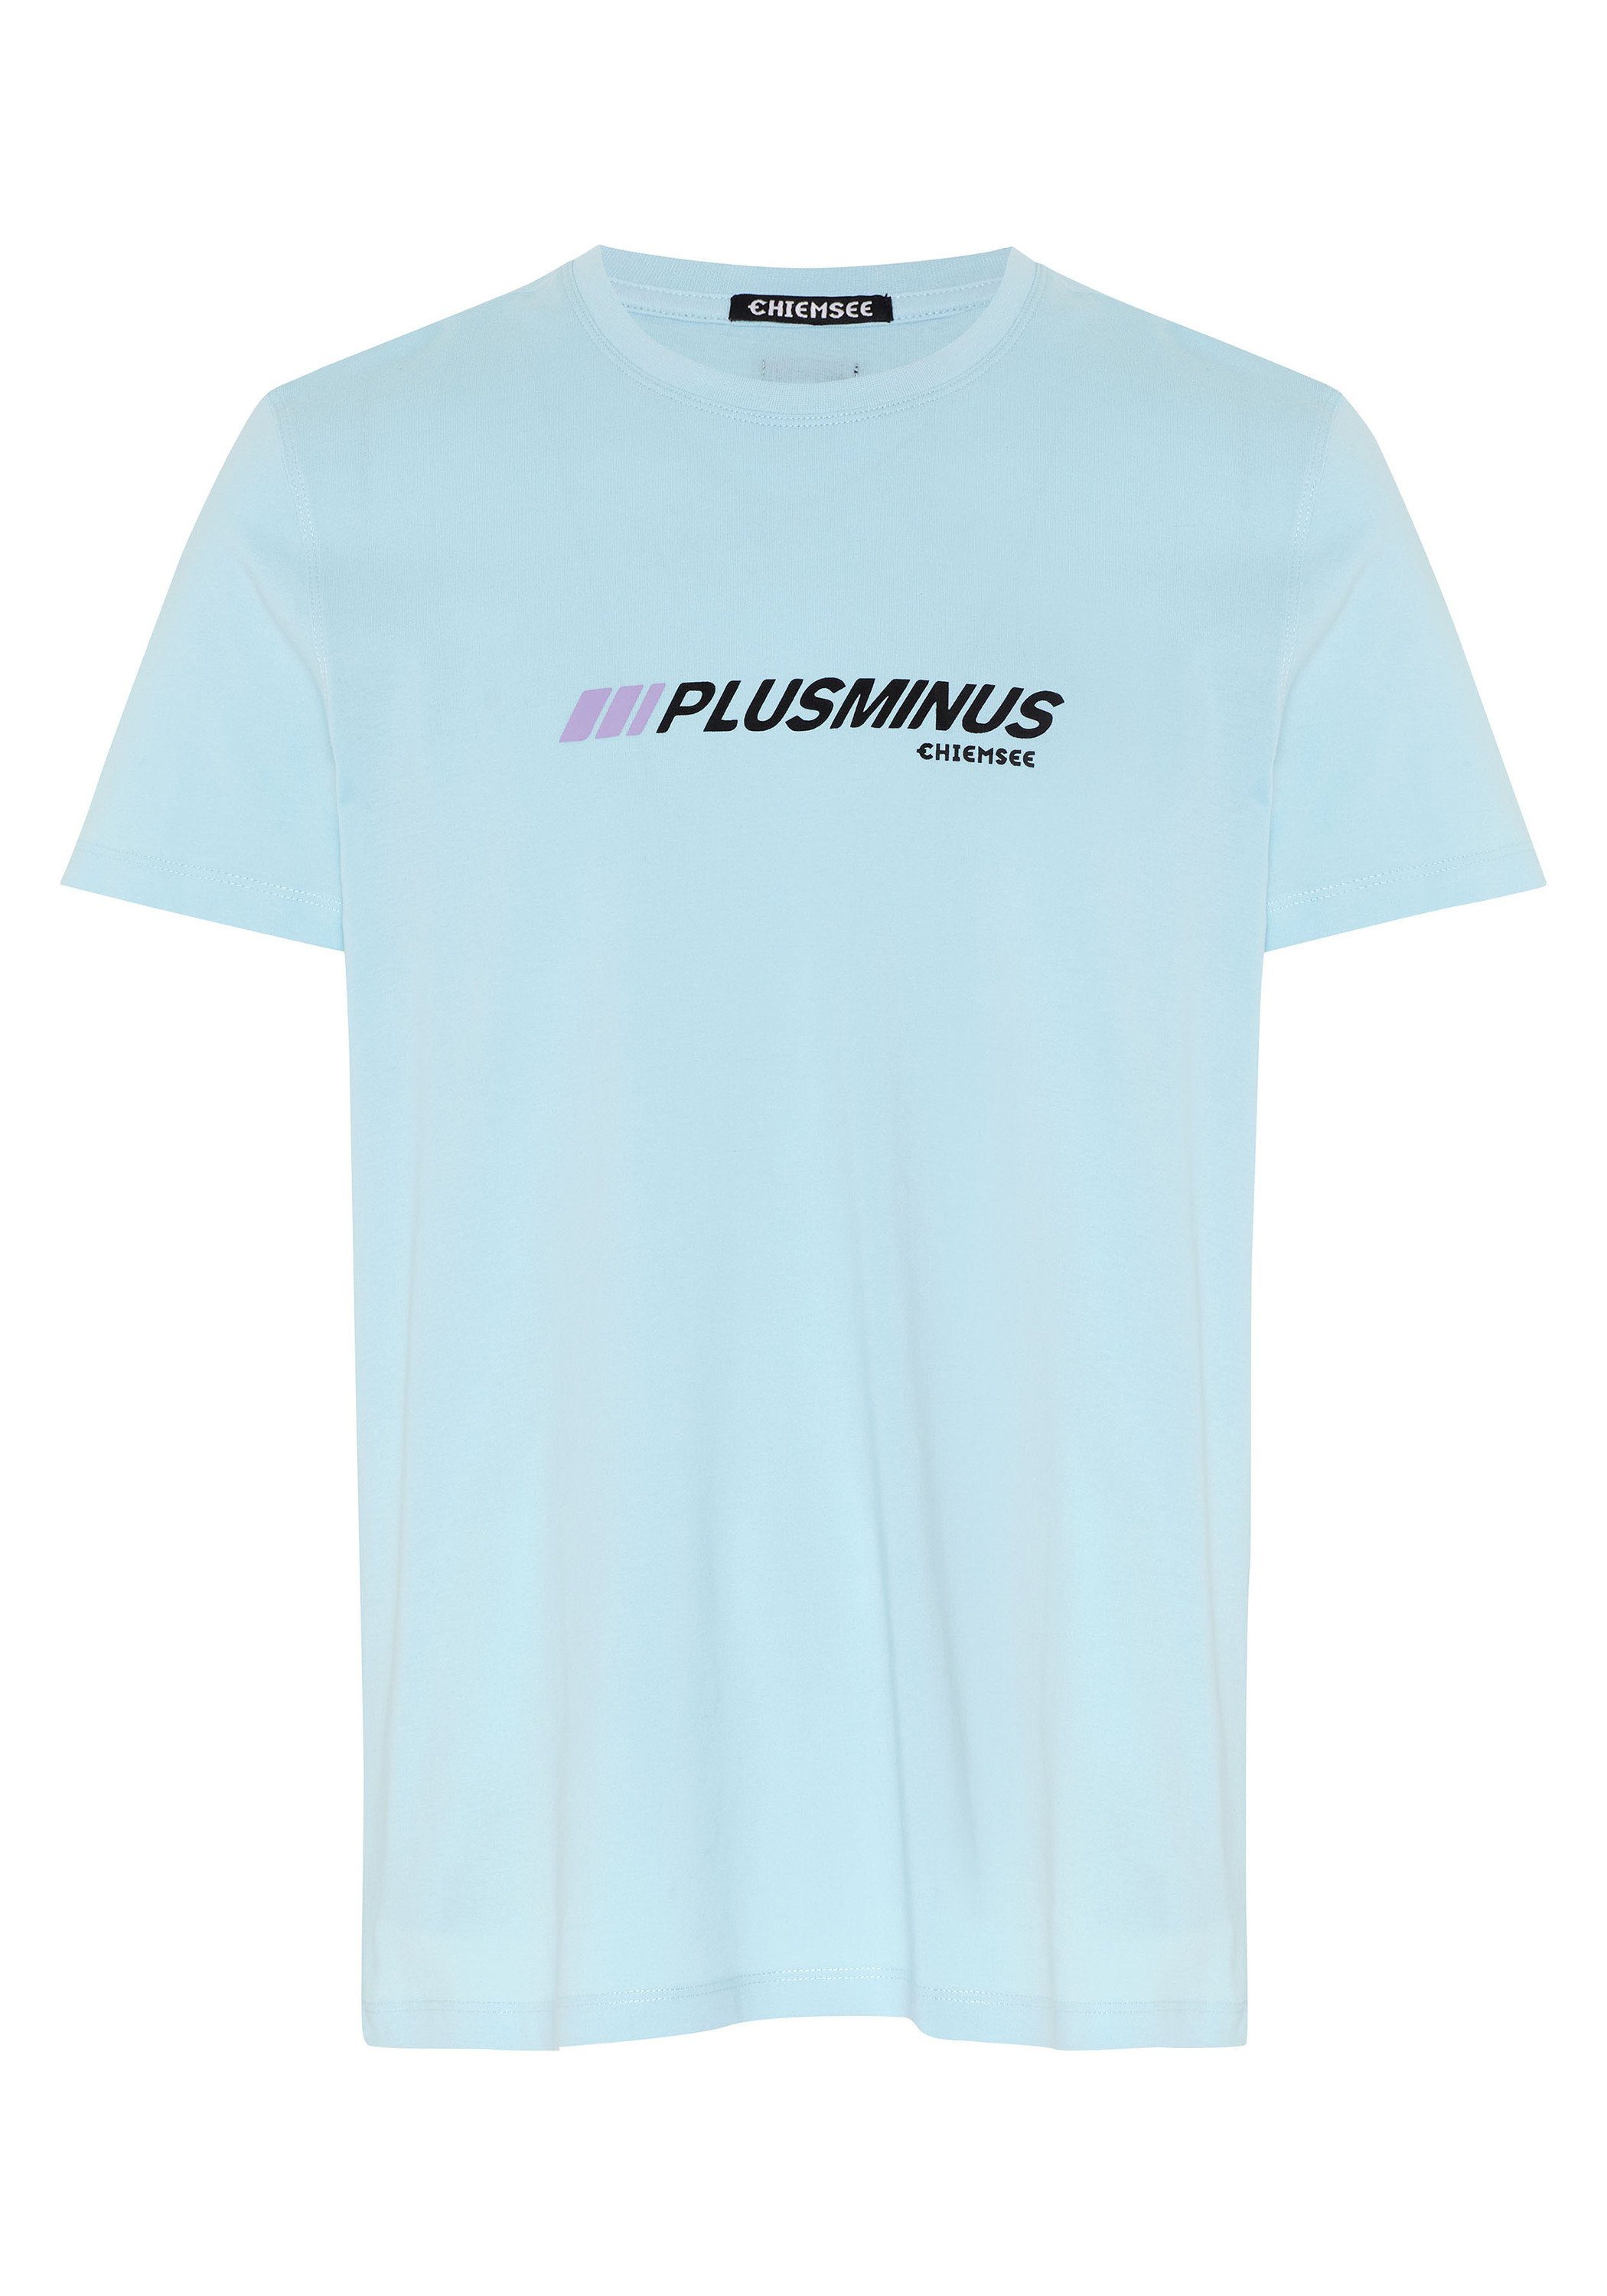 Chiemsee Print-Shirt T-Shirt mit PLUS-MINUS-Print 1 Cool Blue